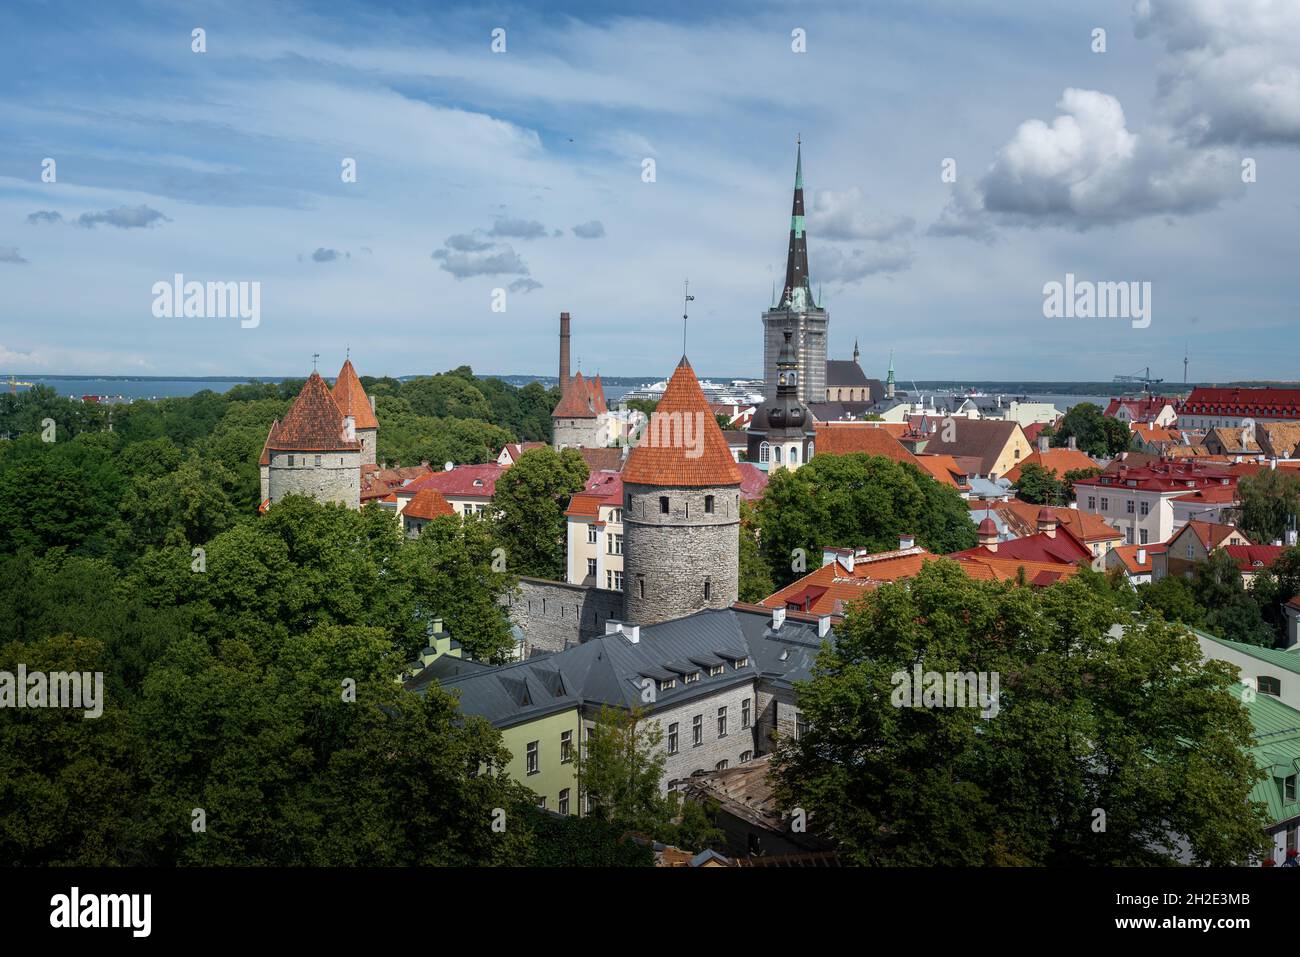 Vista aérea de Tallinn con muchas torres de la muralla de la ciudad de Tallinn y la torre de la iglesia de St Olaf - Tallinn, Estonia Foto de stock